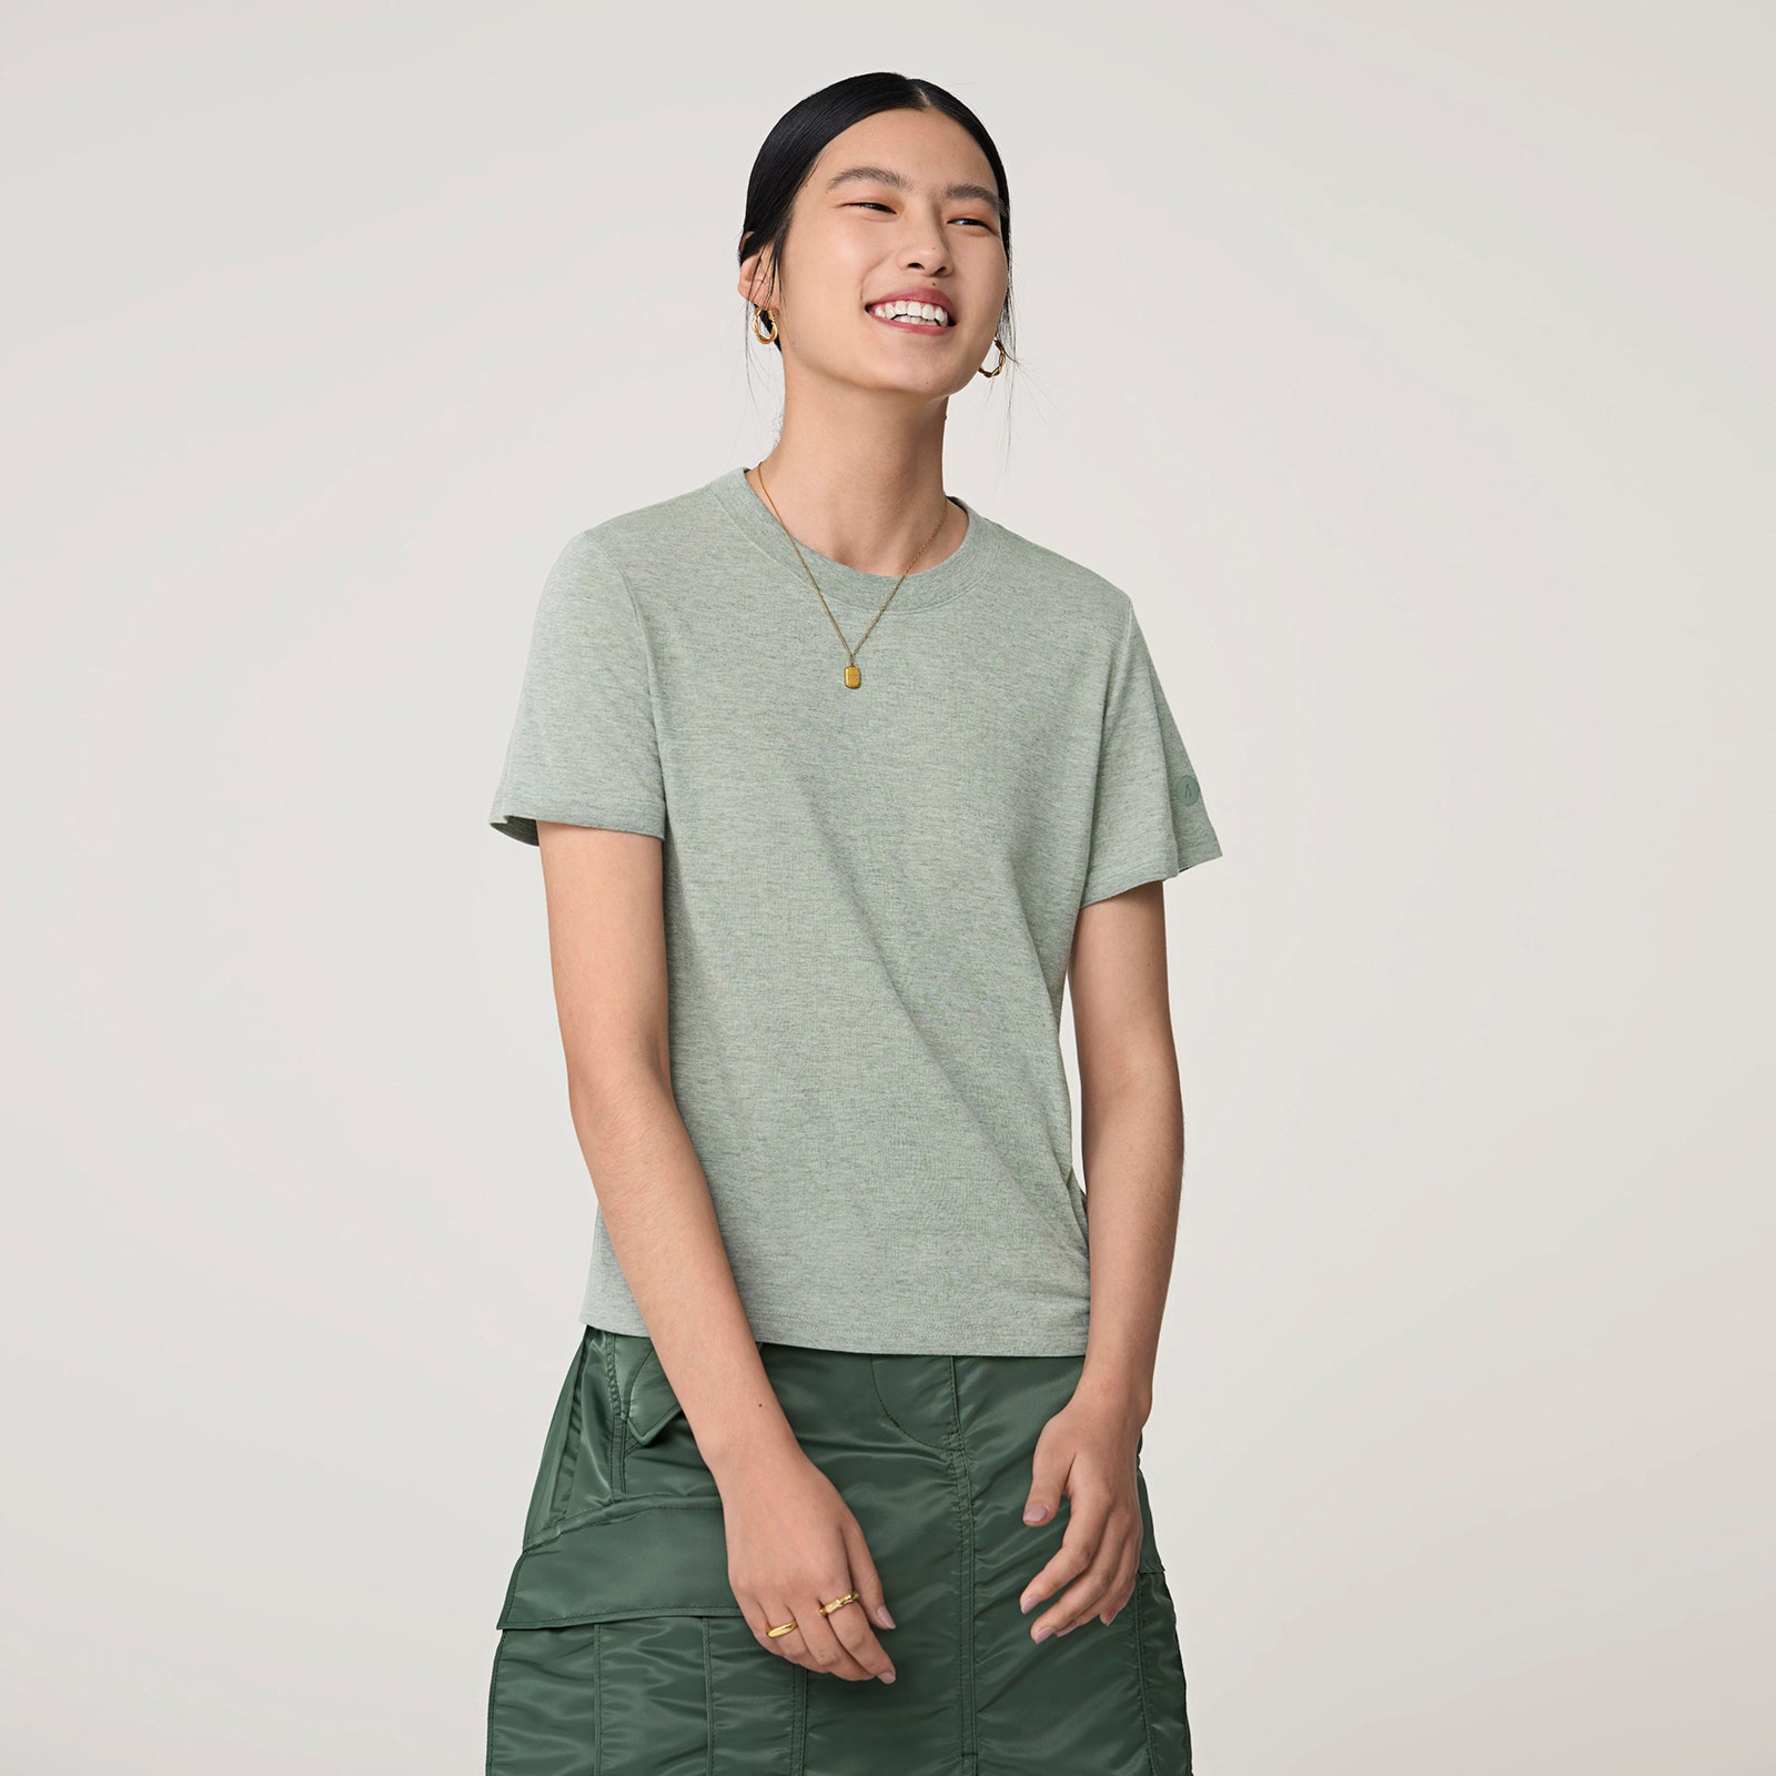 Women's Long Sleeve Sea Tee, Classic Fit T-shirt